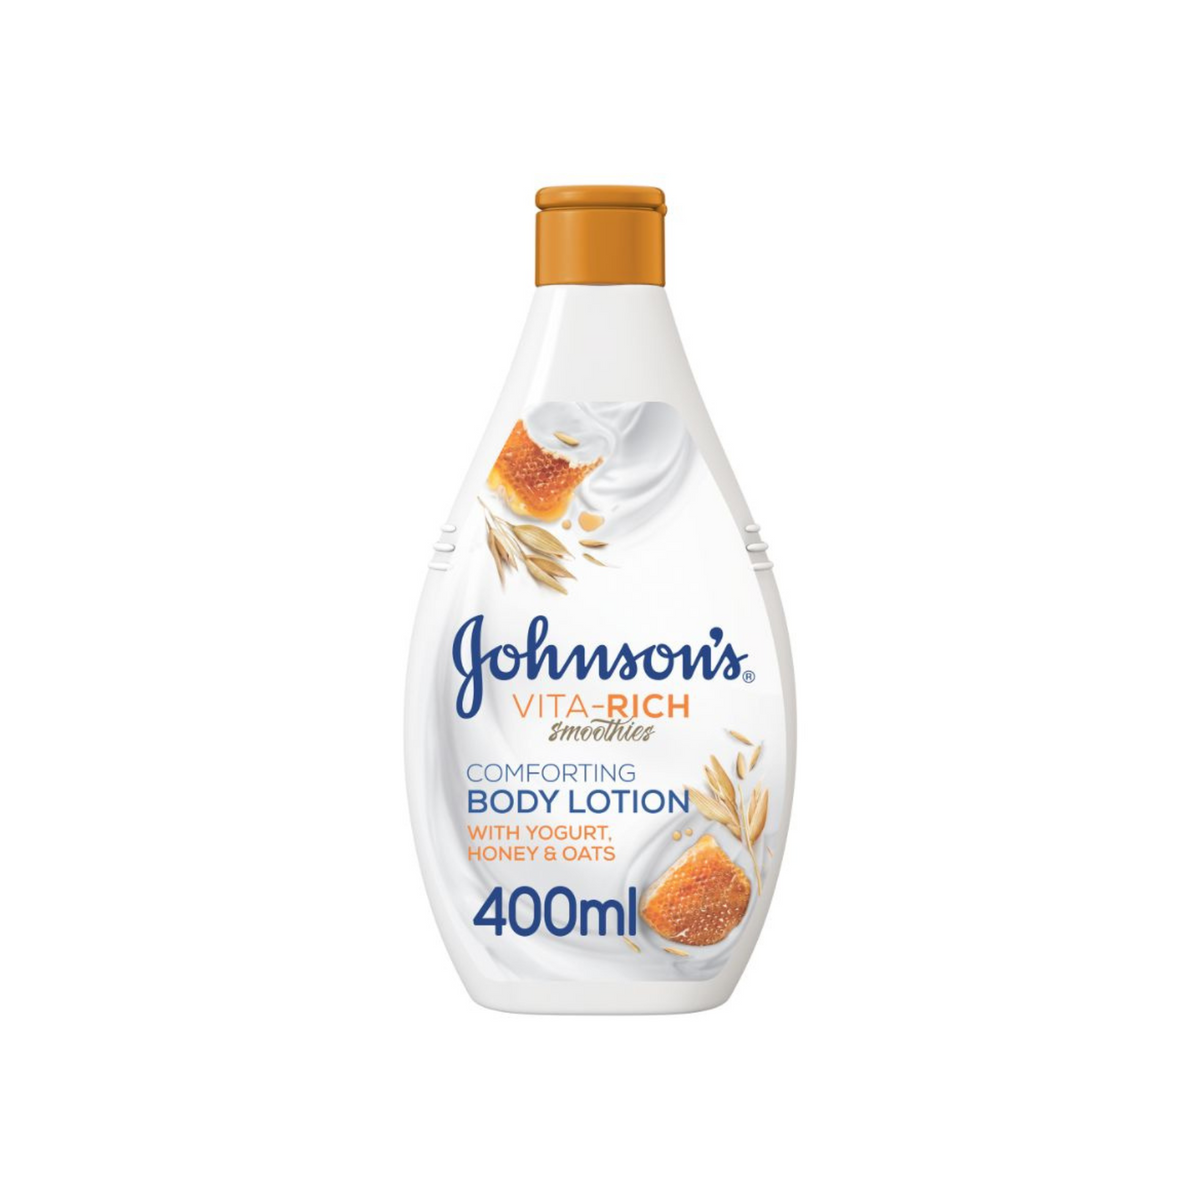 Johnson's Vita-Rich Body Lotion Honey/Yogurt, 400ml